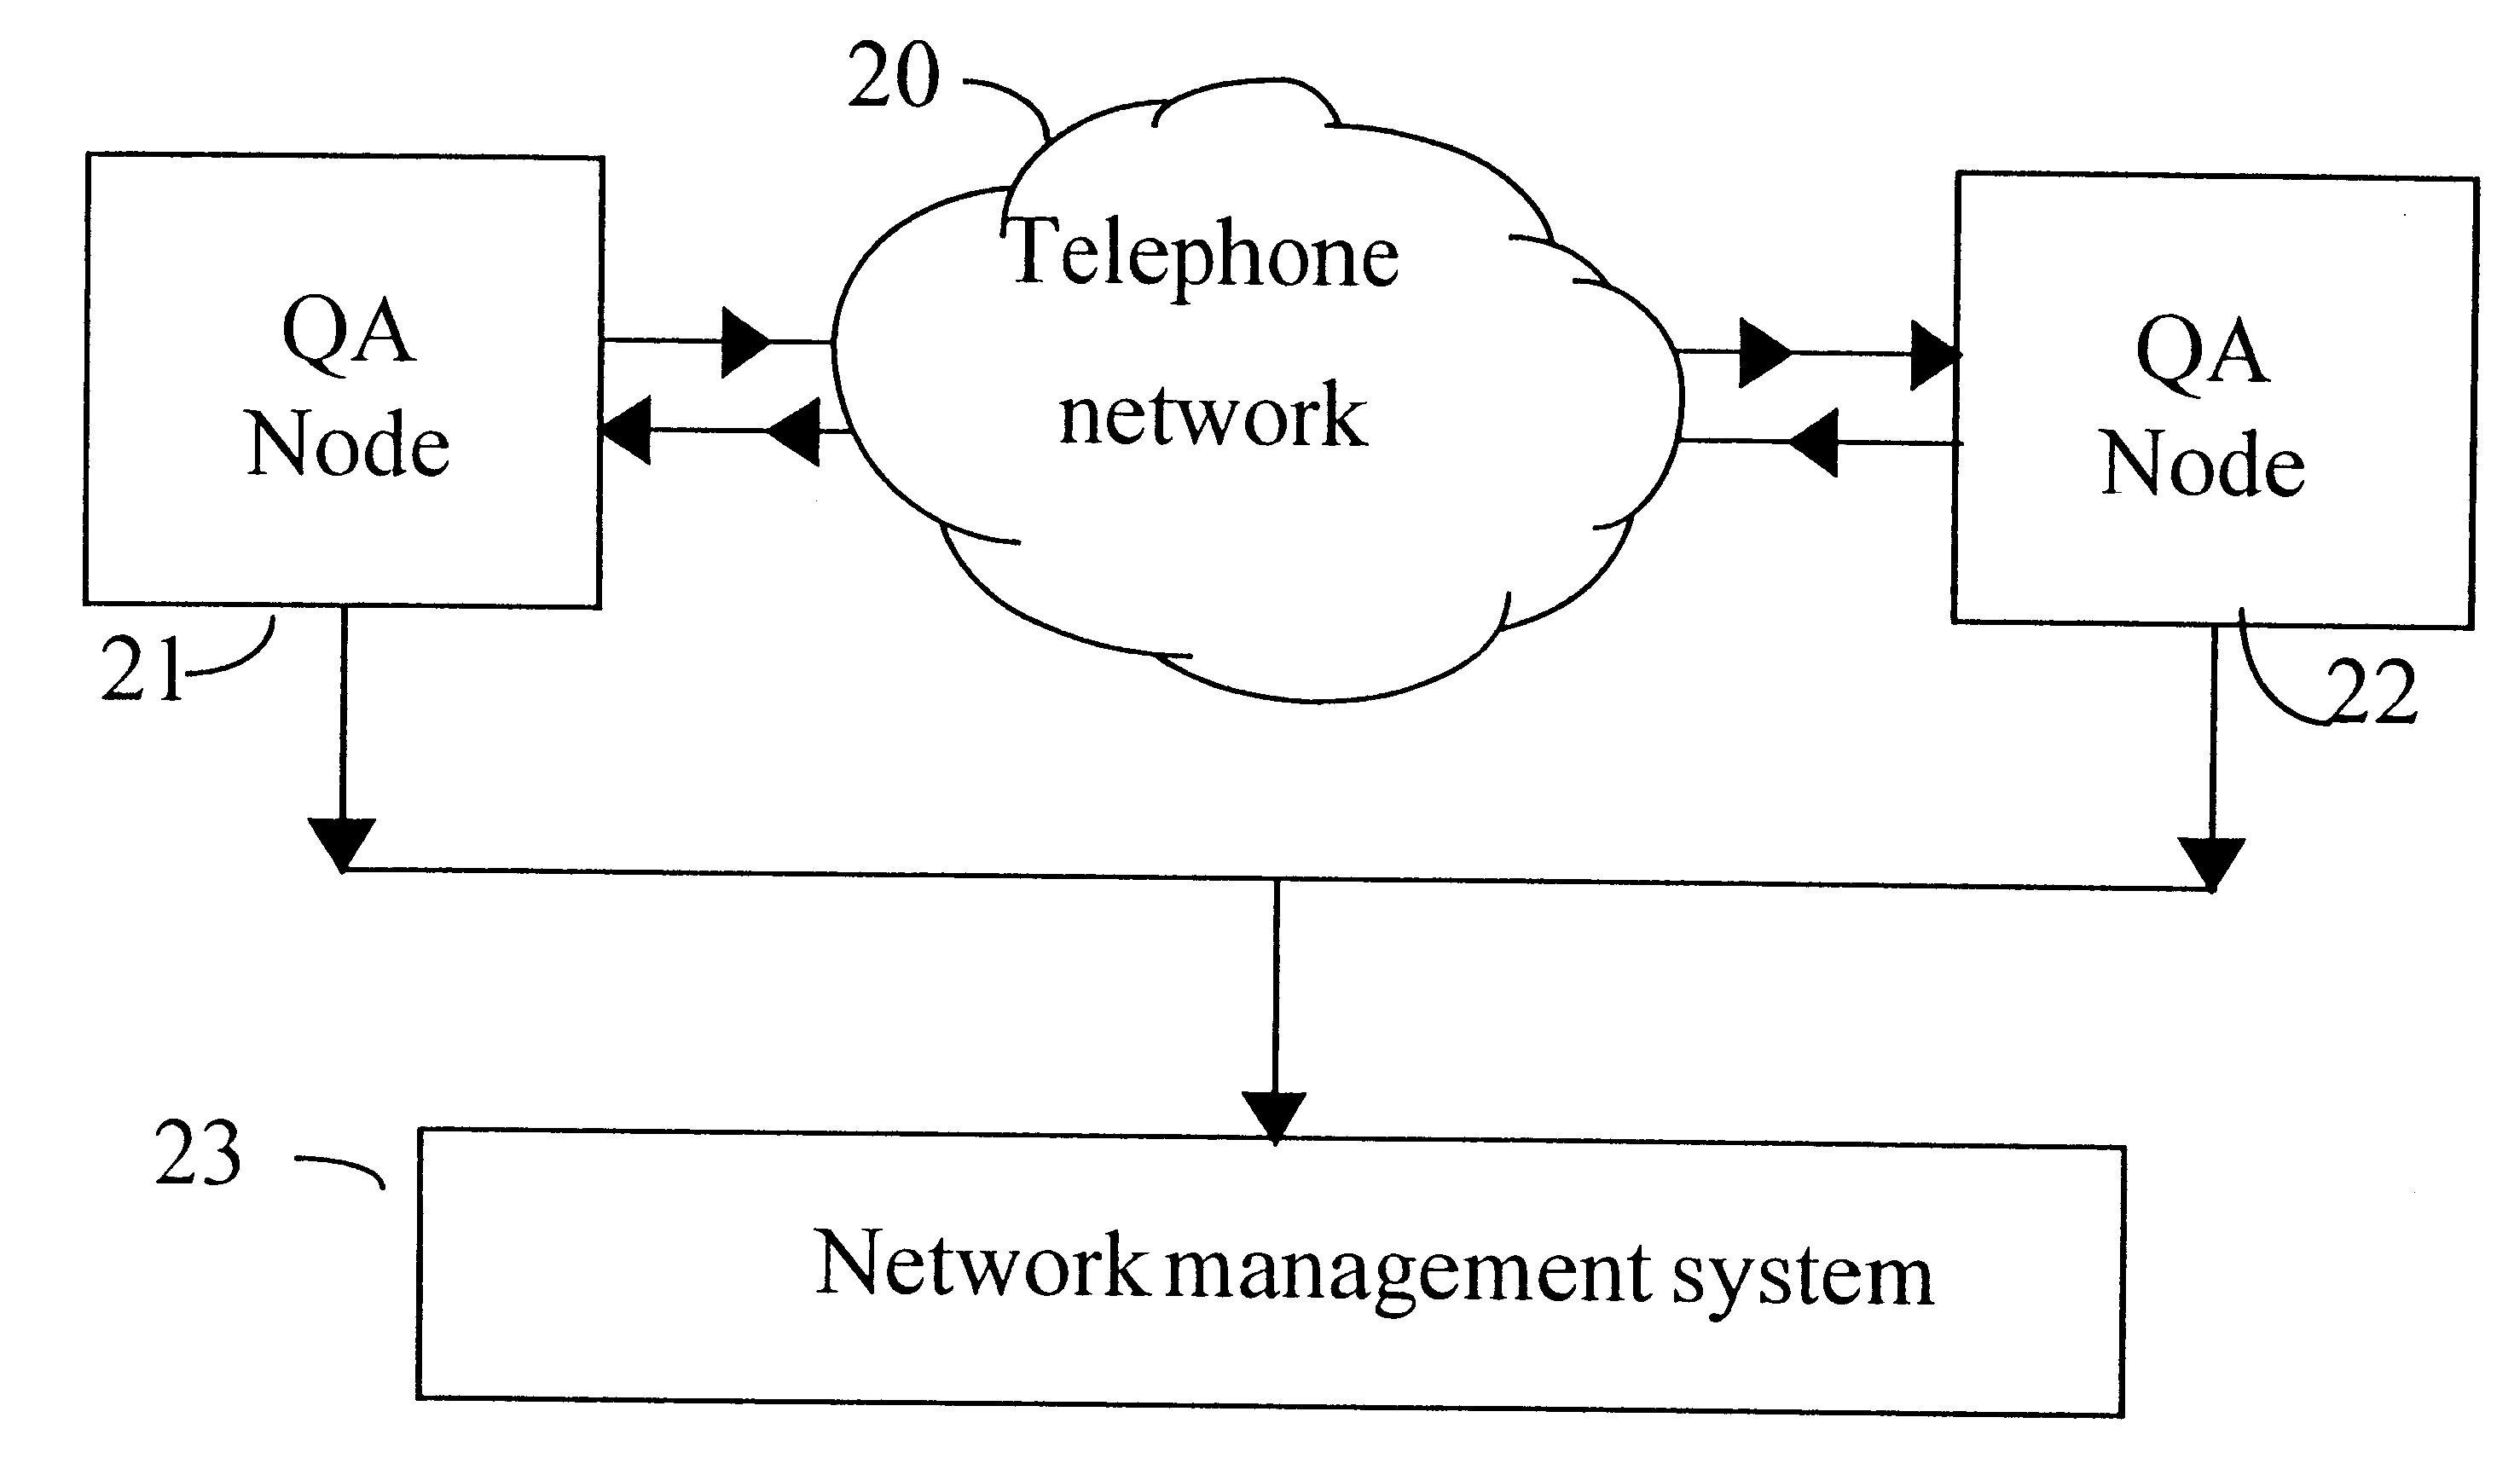 Testing telecommunications equipment